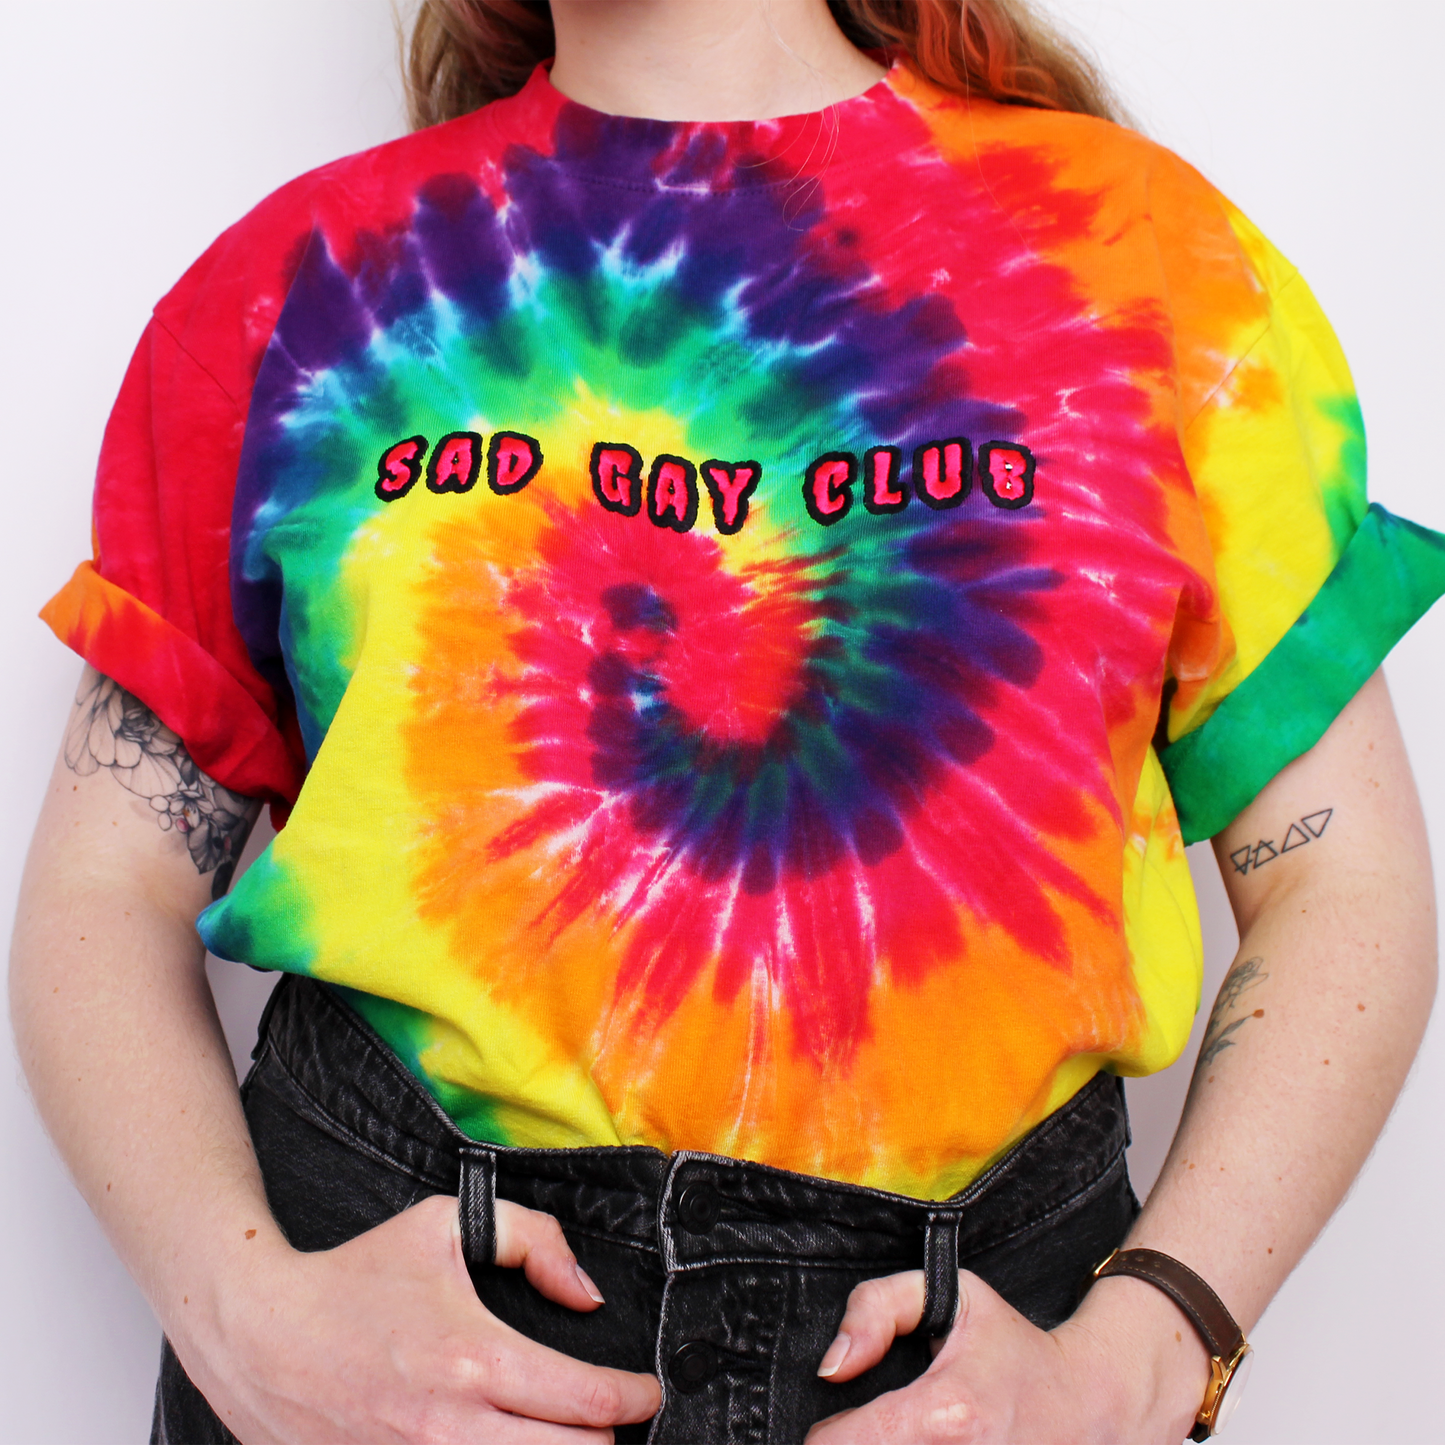 Sad Gay Club Tie-Dye Tee